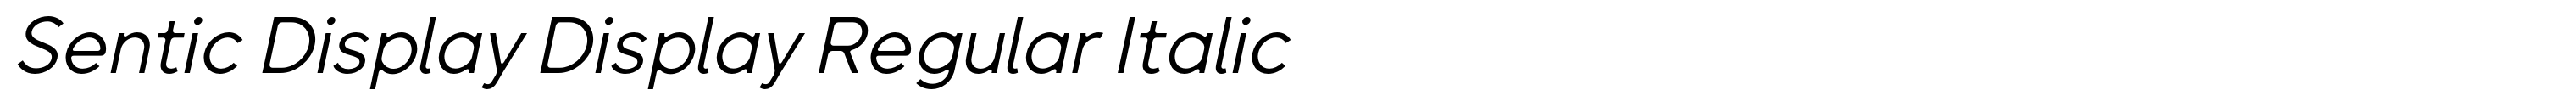 Sentic Display Display Regular Italic